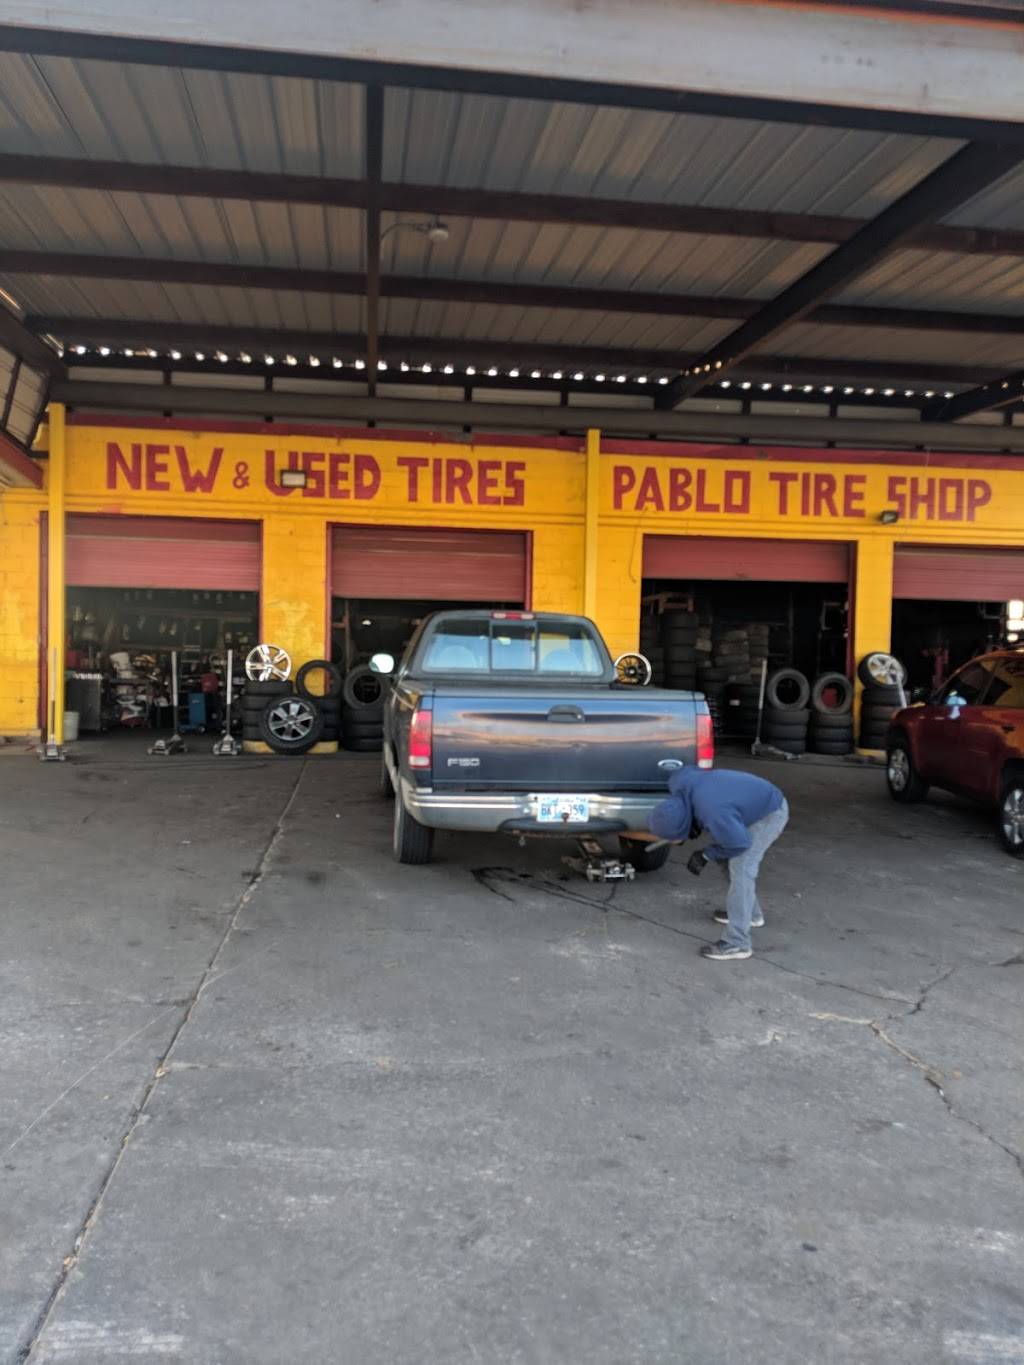 Pablo Tire Shop - car repair  | Photo 3 of 8 | Address: 3125 N May Ave, Oklahoma City, OK 73112, USA | Phone: (405) 949-0551